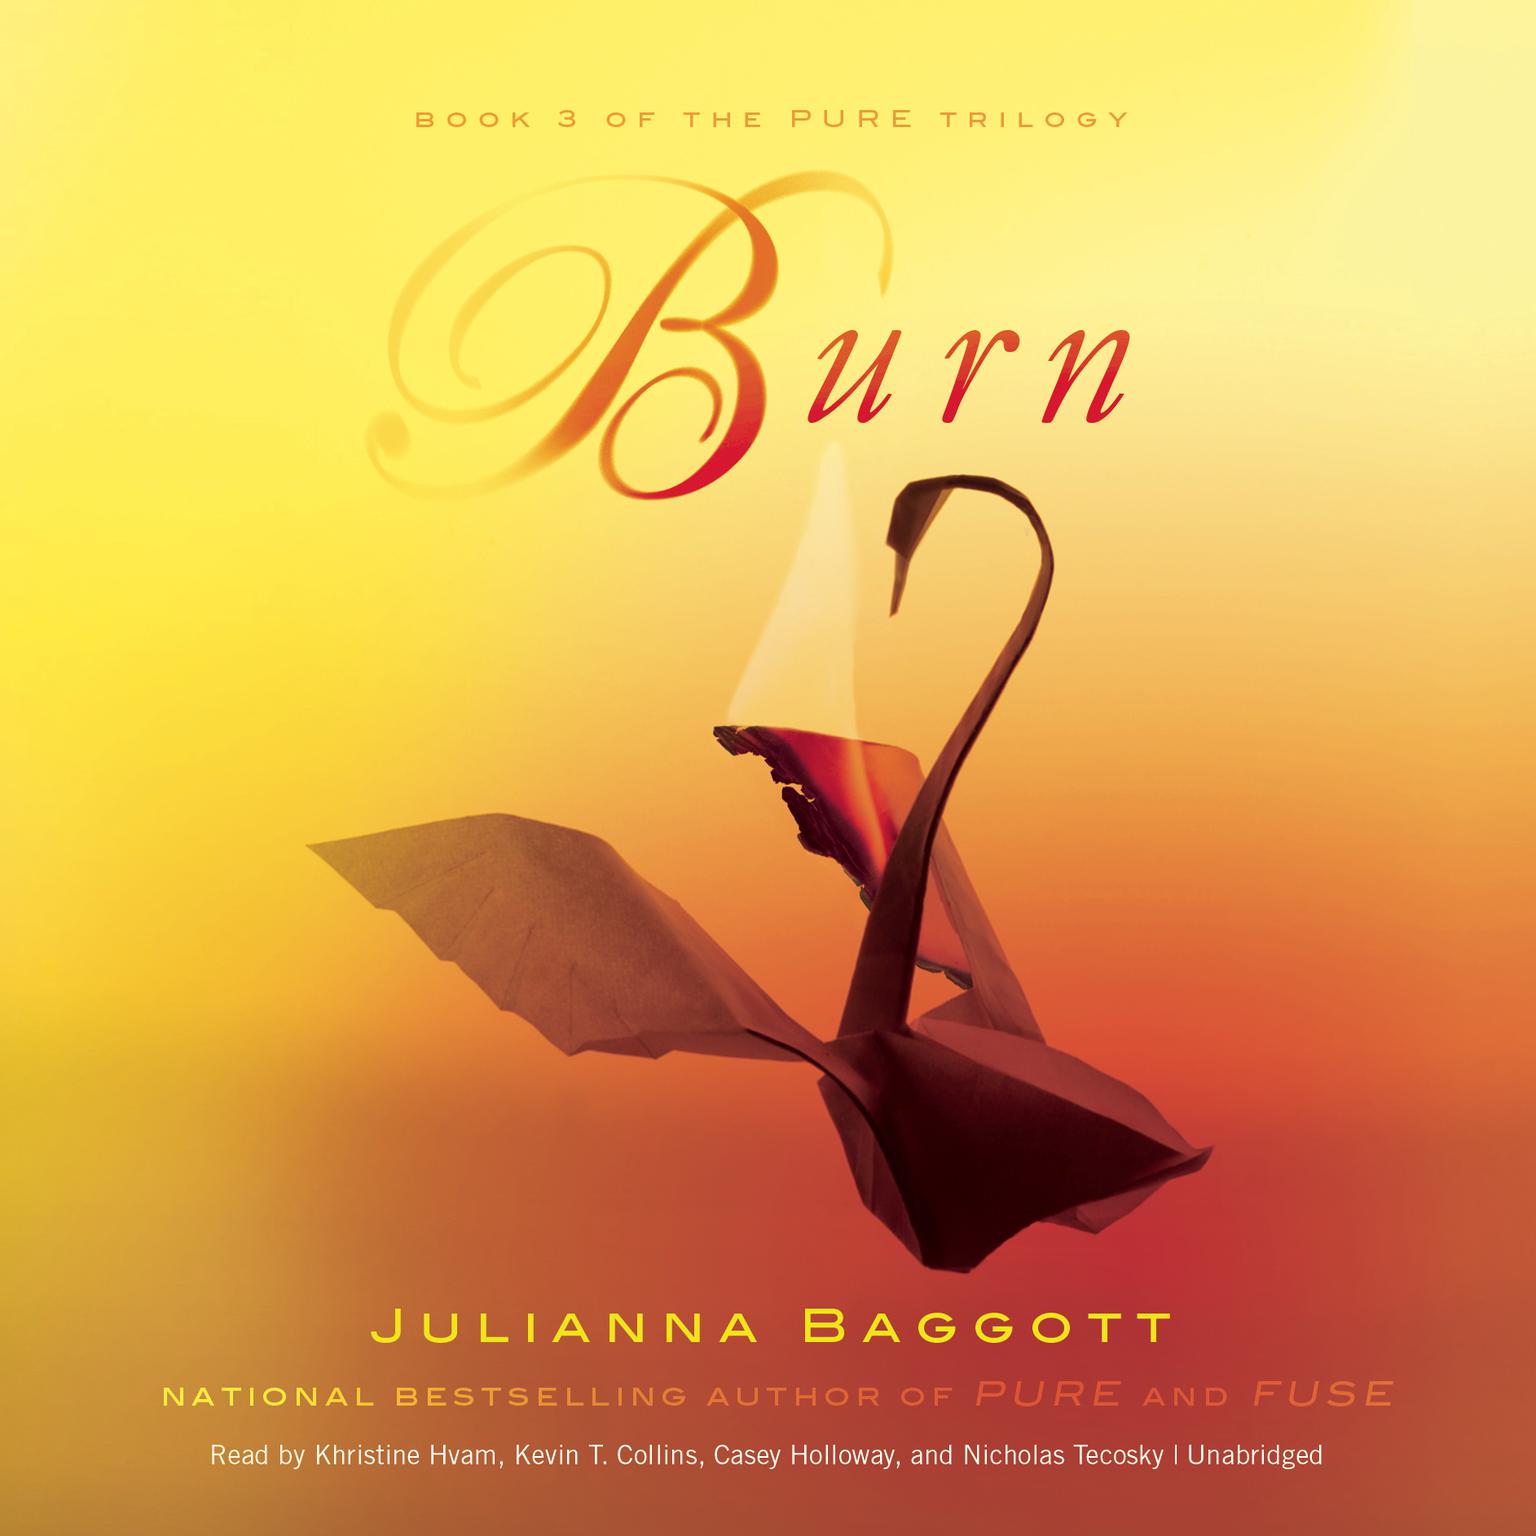 Burn Audiobook, by Julianna Baggott